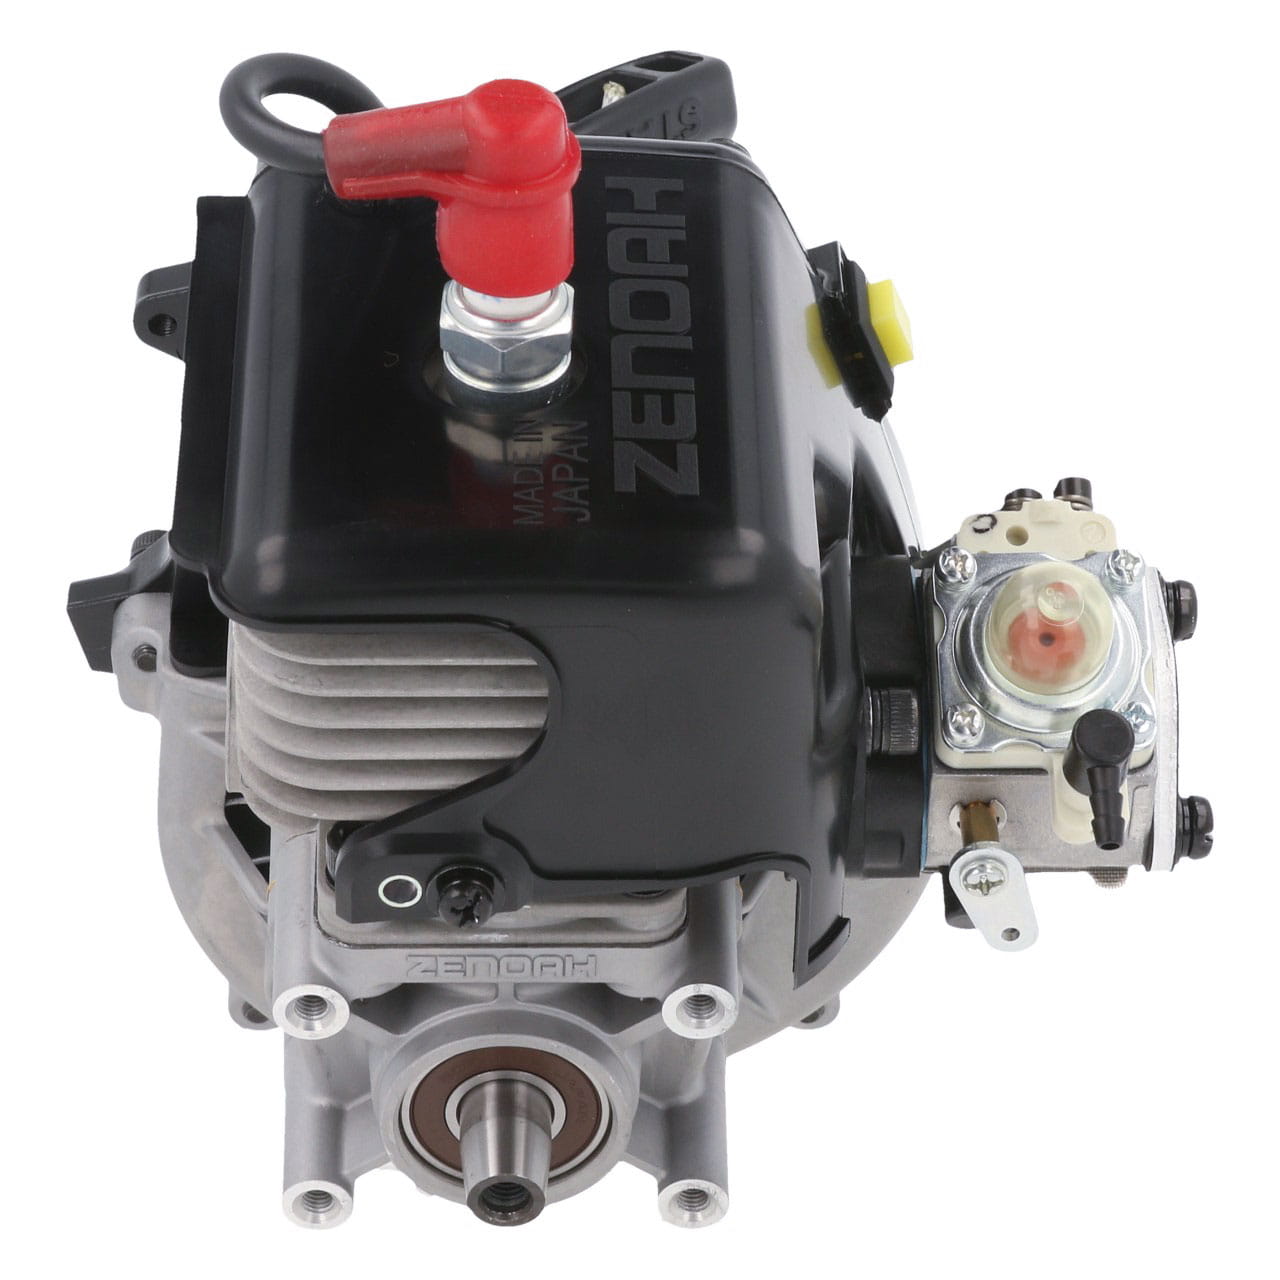 Zenoah G240RC Motor 23cm³ (ohne. Kupplung, Filter, Reso)